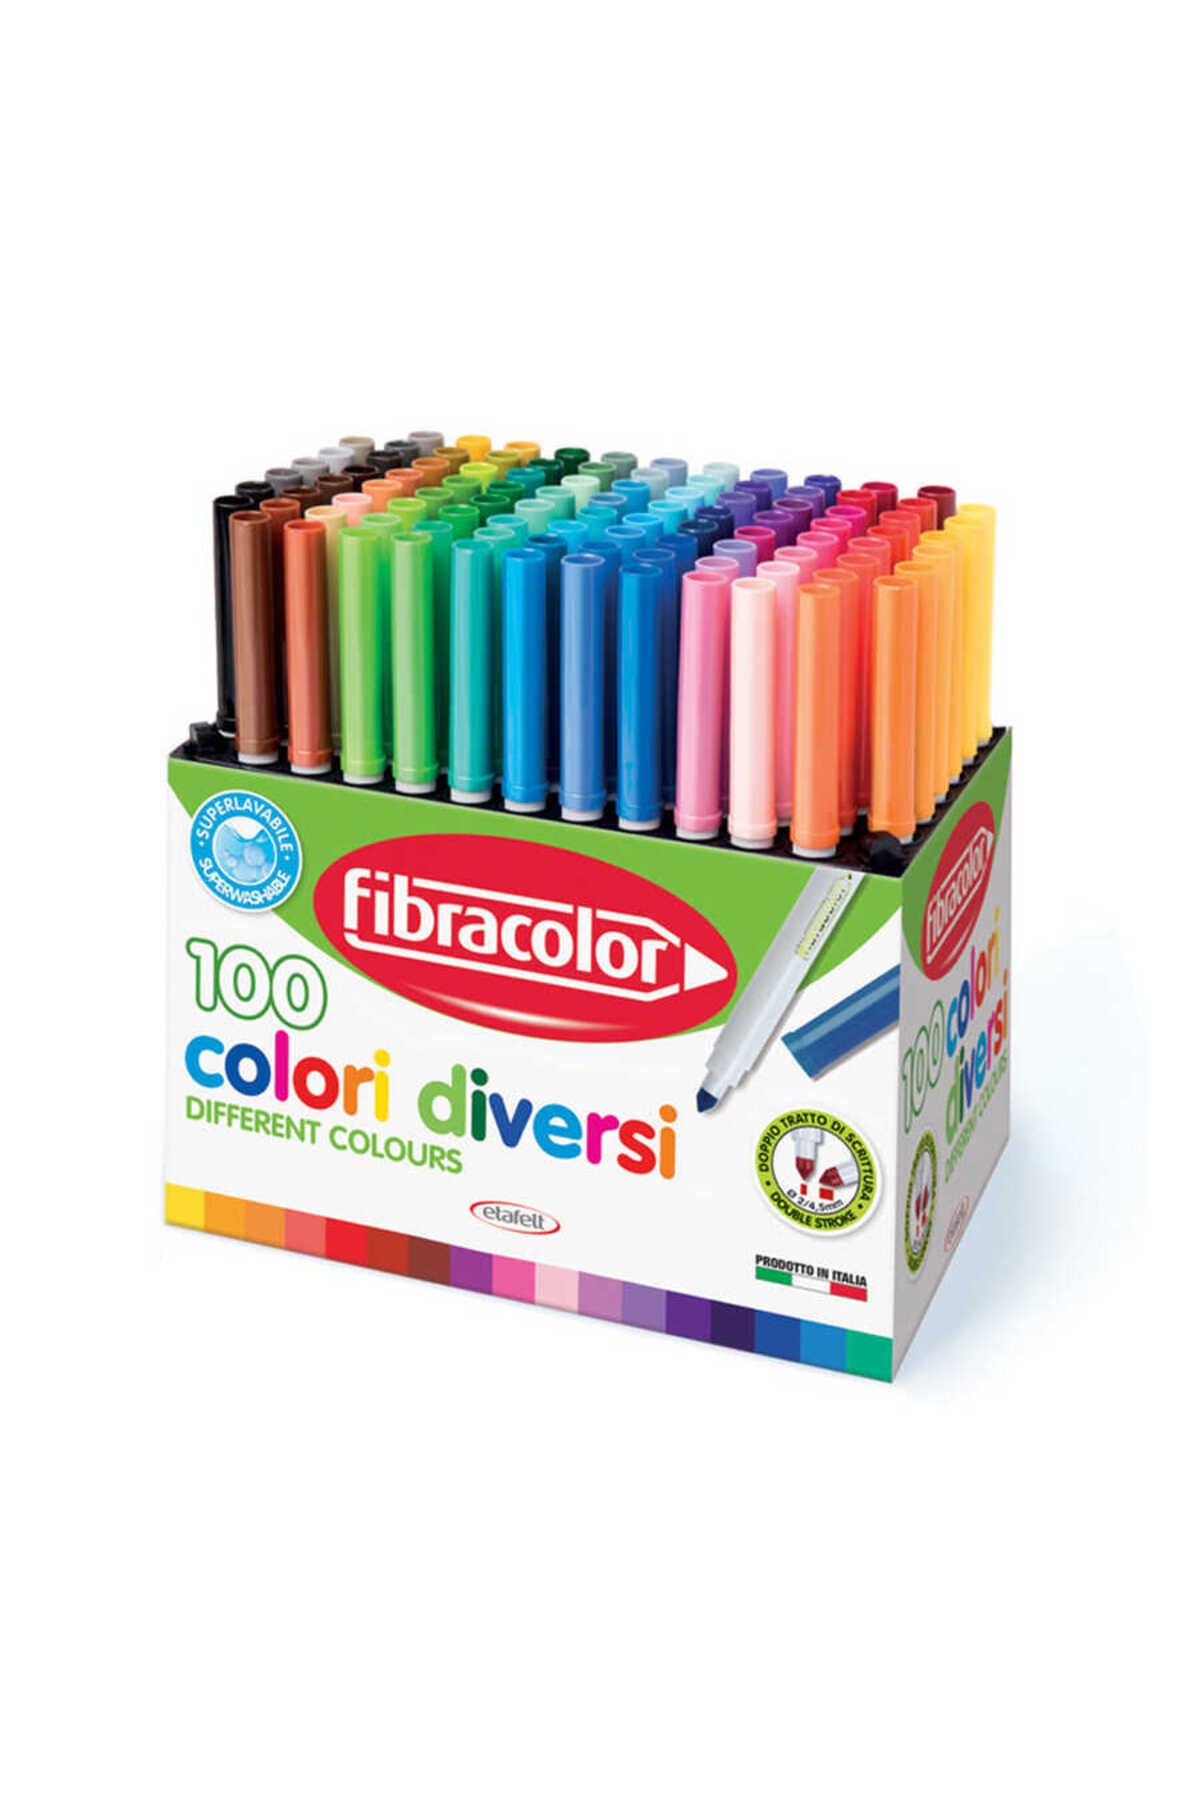 Fibracolor Colori Diversi 100 Colors - Trendyol